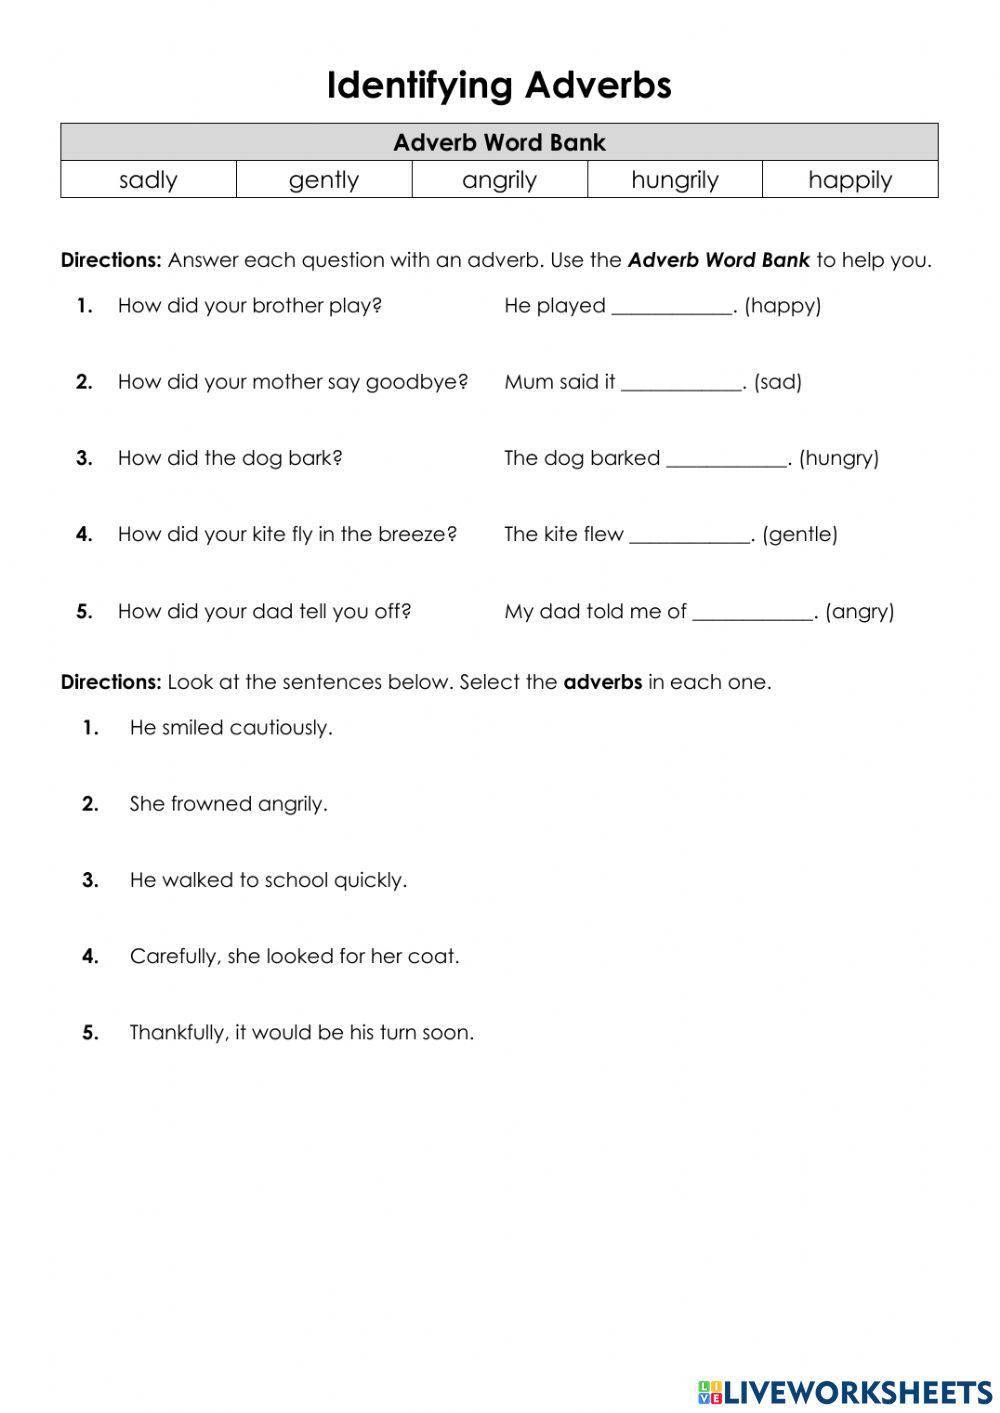 nouns-verbs-adjectives-and-adverbs-worksheet-pdf-adverbworksheets